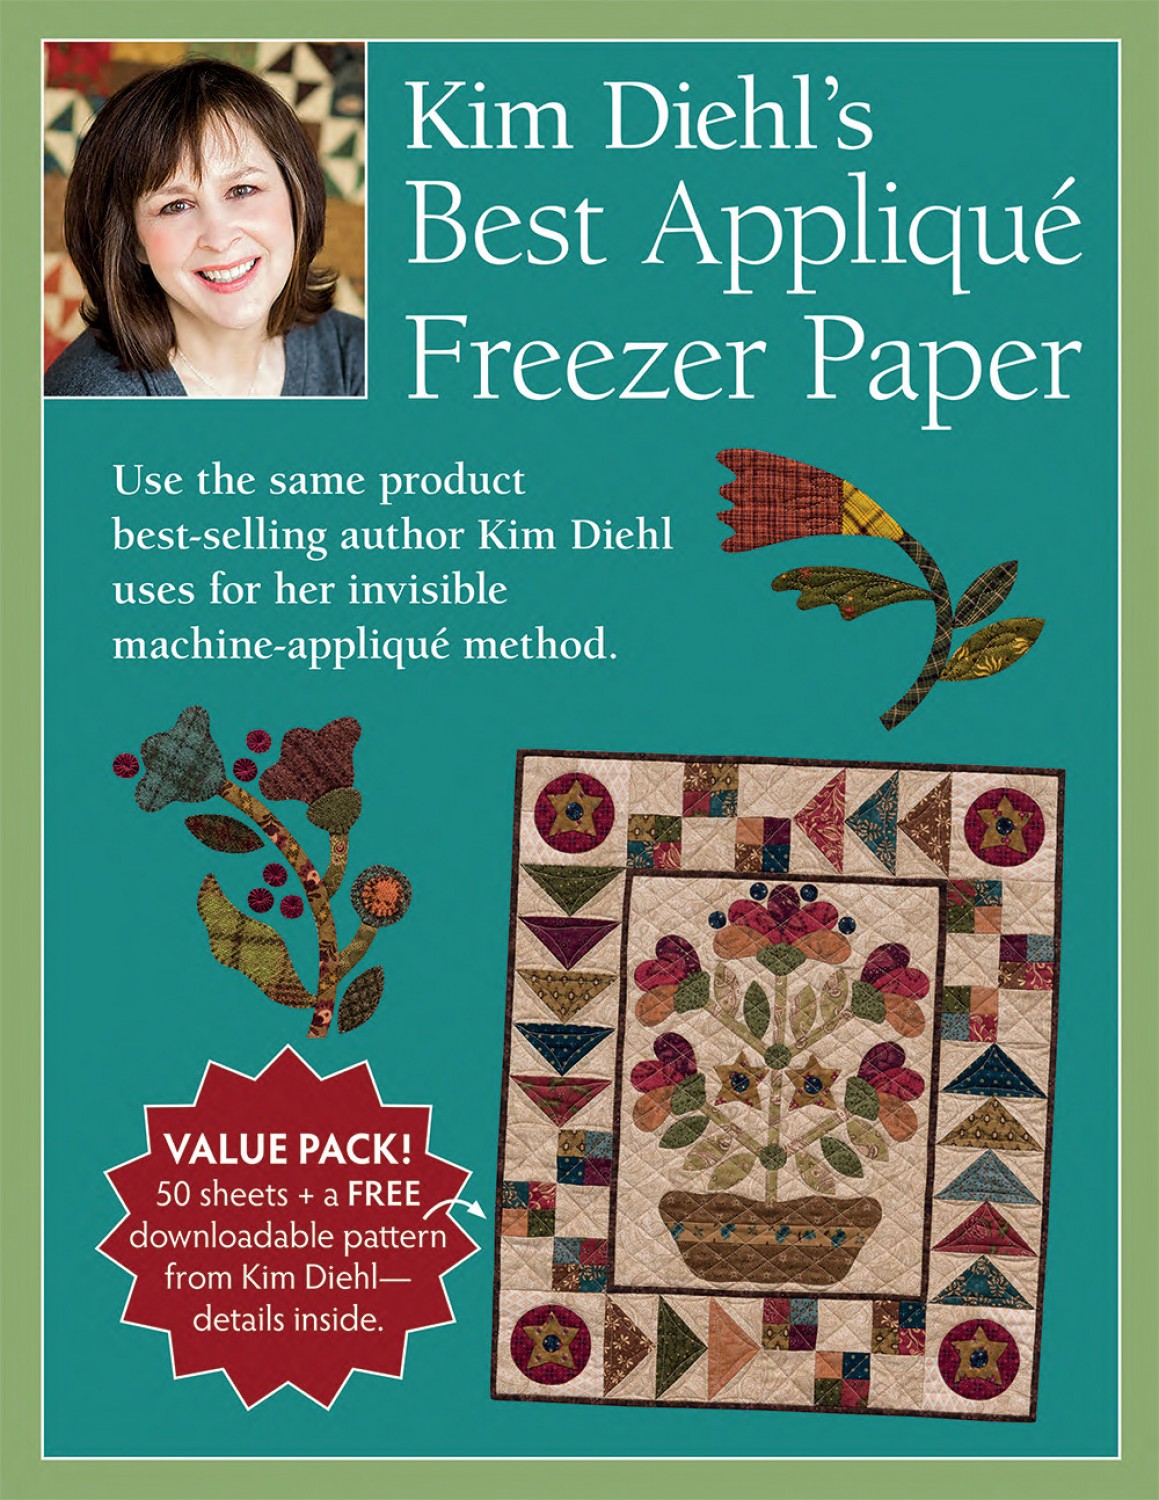 Kim Diehl's Best Applique Freezer Paper preview